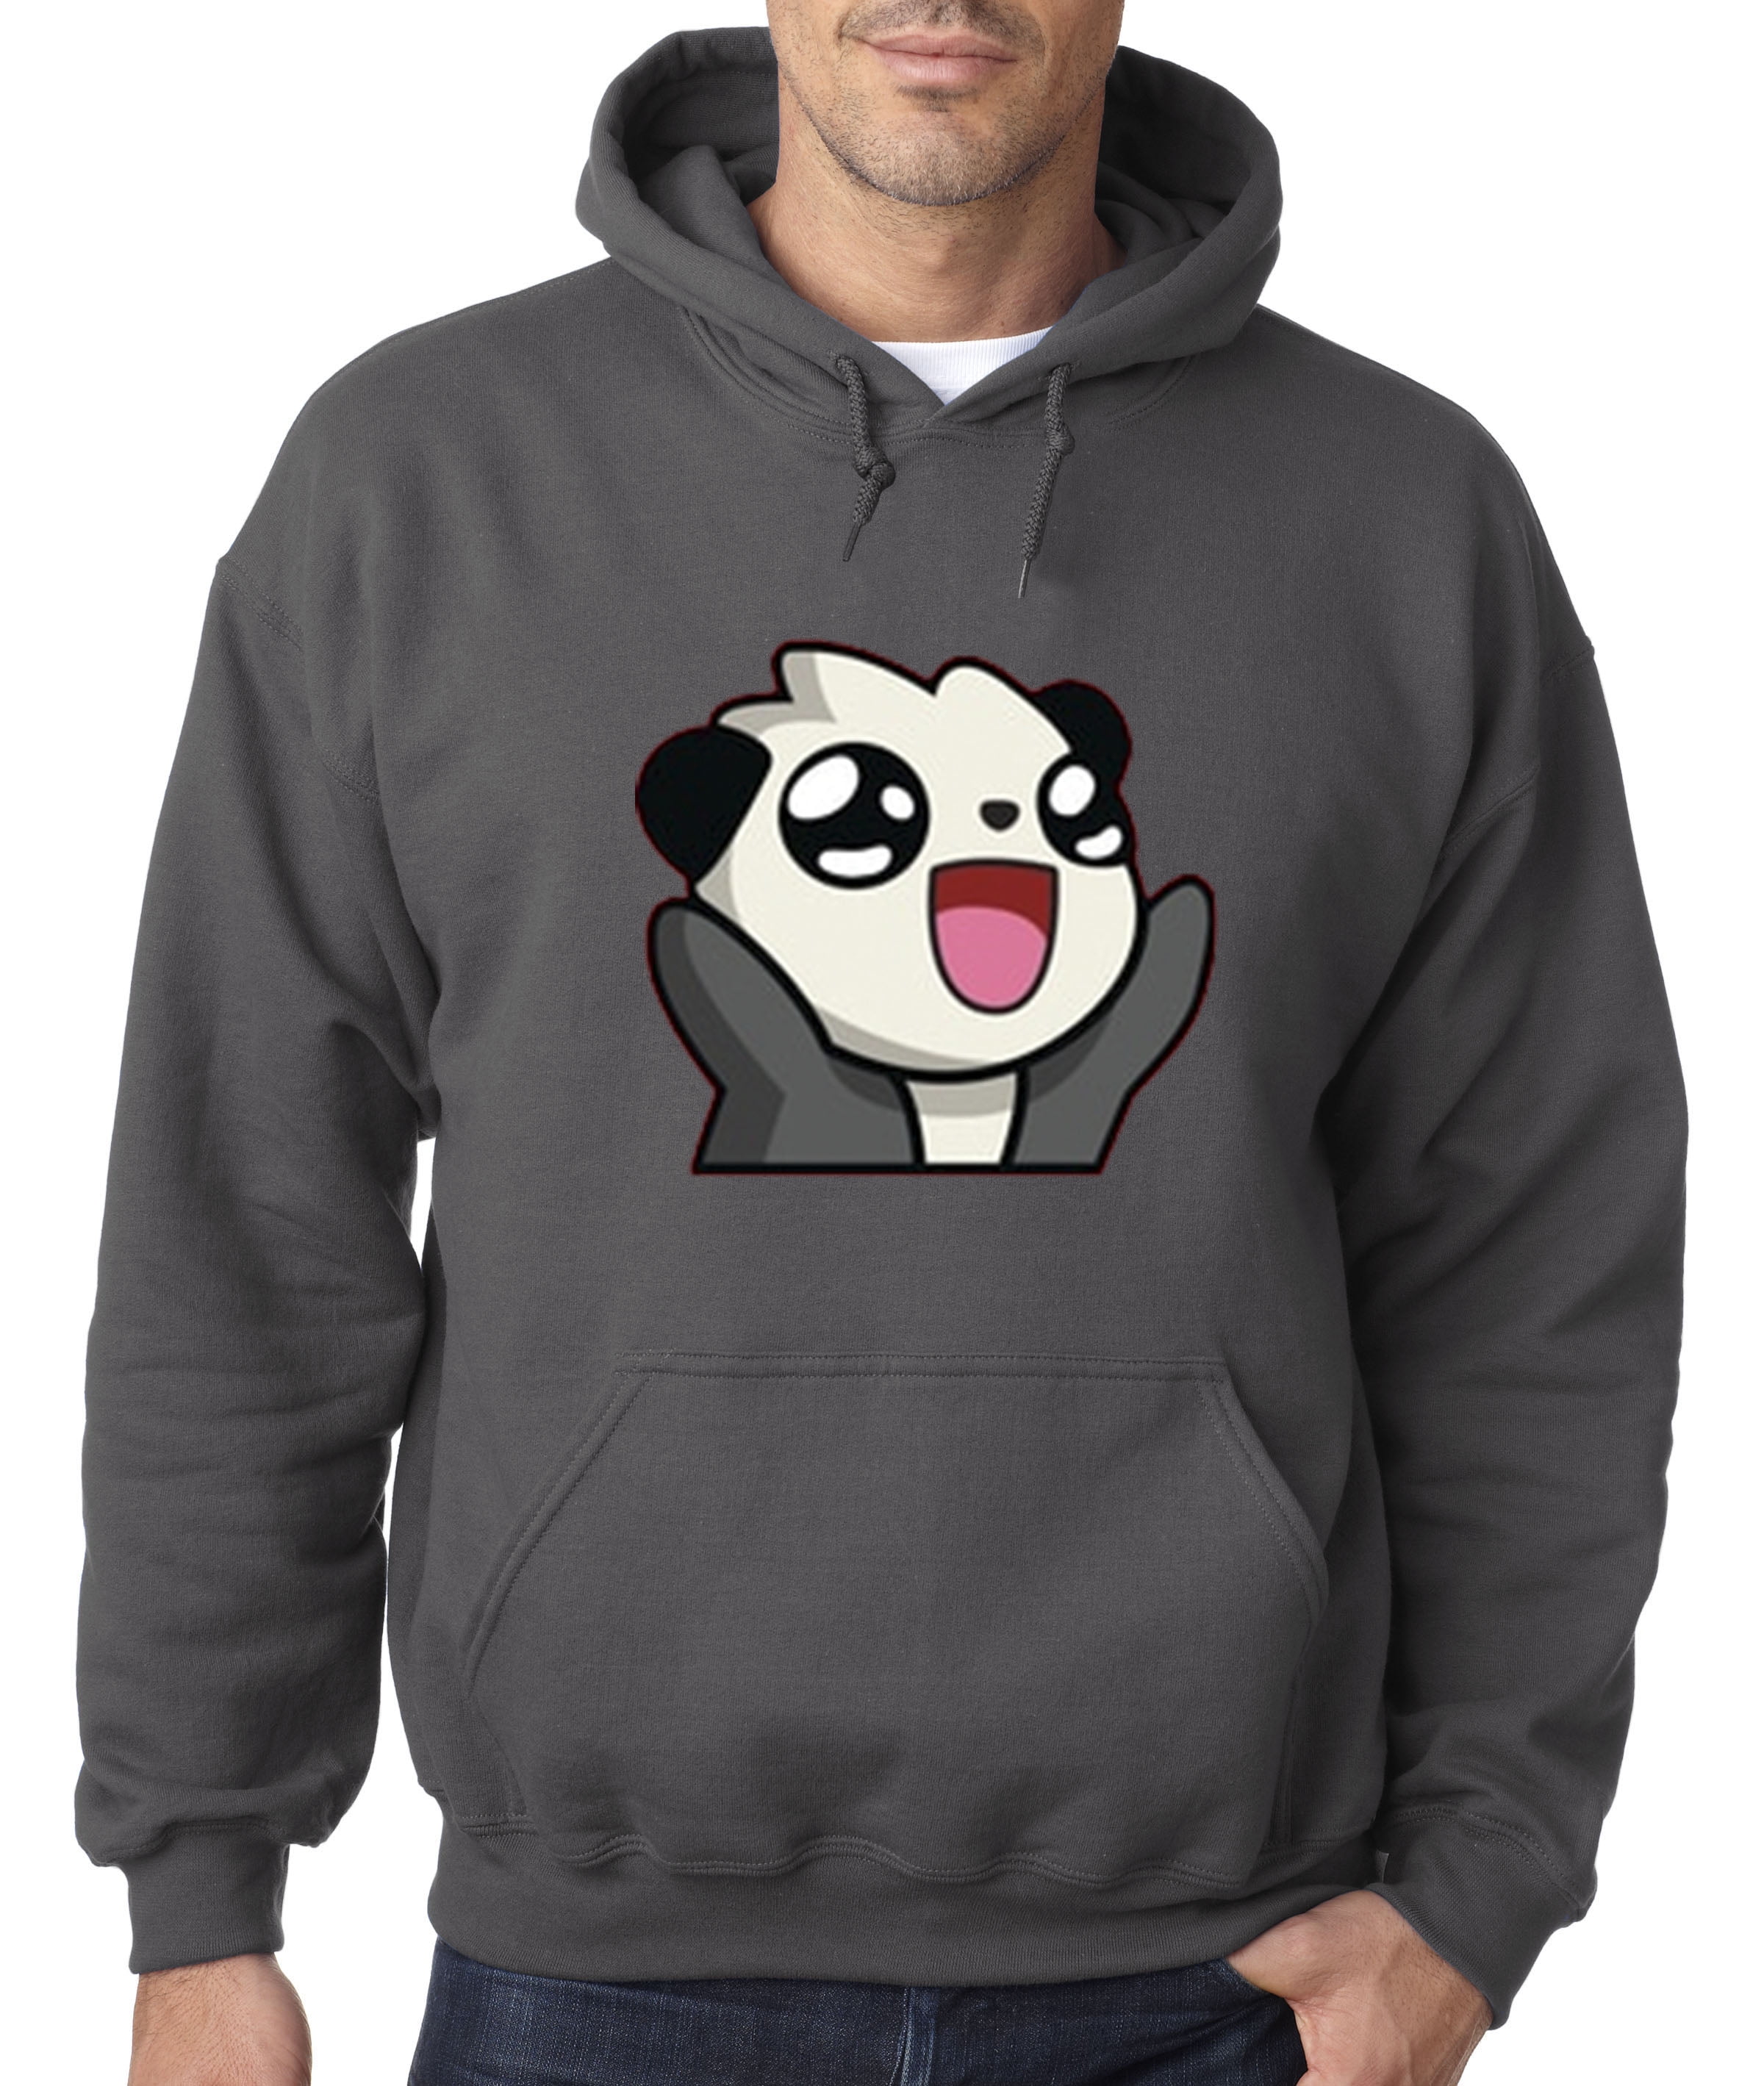 690284088735 UPC 622 - Hoodie Anime Panda Cute Cartoon Character Sweatshirt